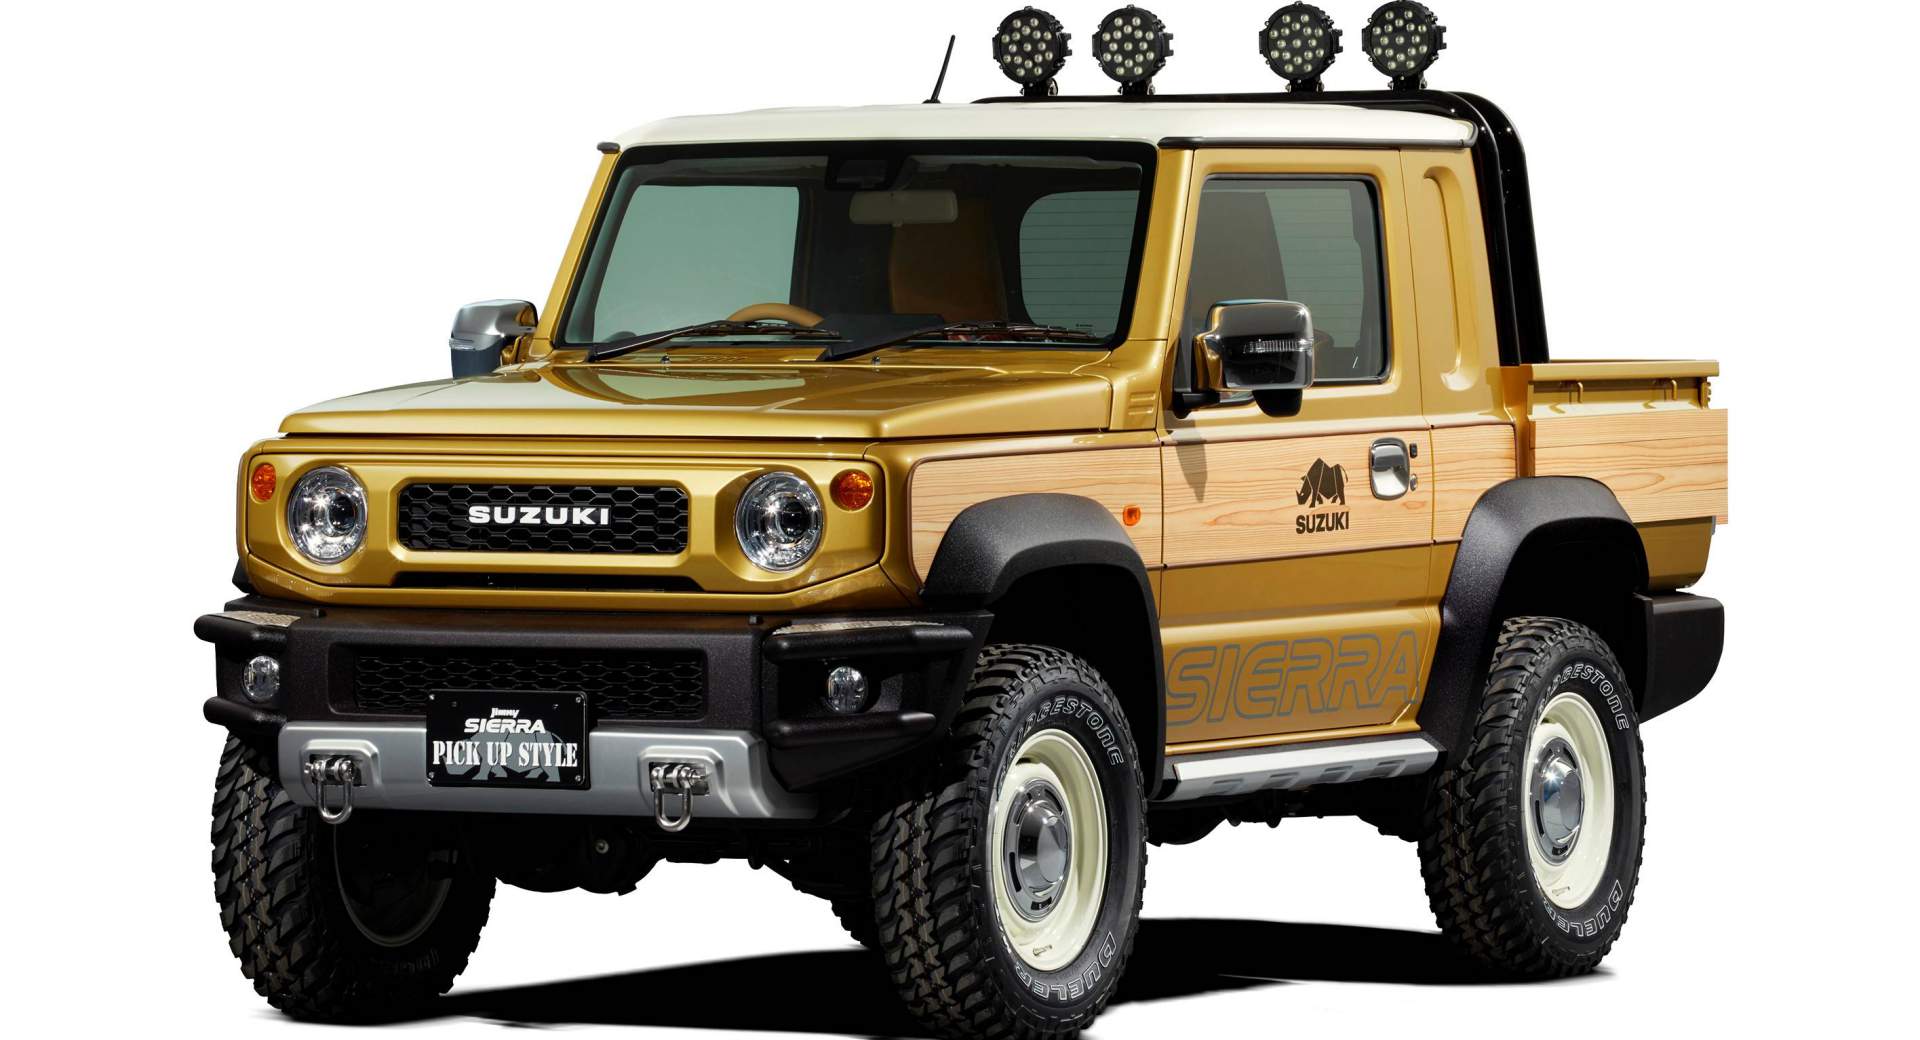 https://www.carscoops.com/wp-content/uploads/2018/12/96362e05-suzuki-jimny-sierra-pickup-style-concept-0.jpg